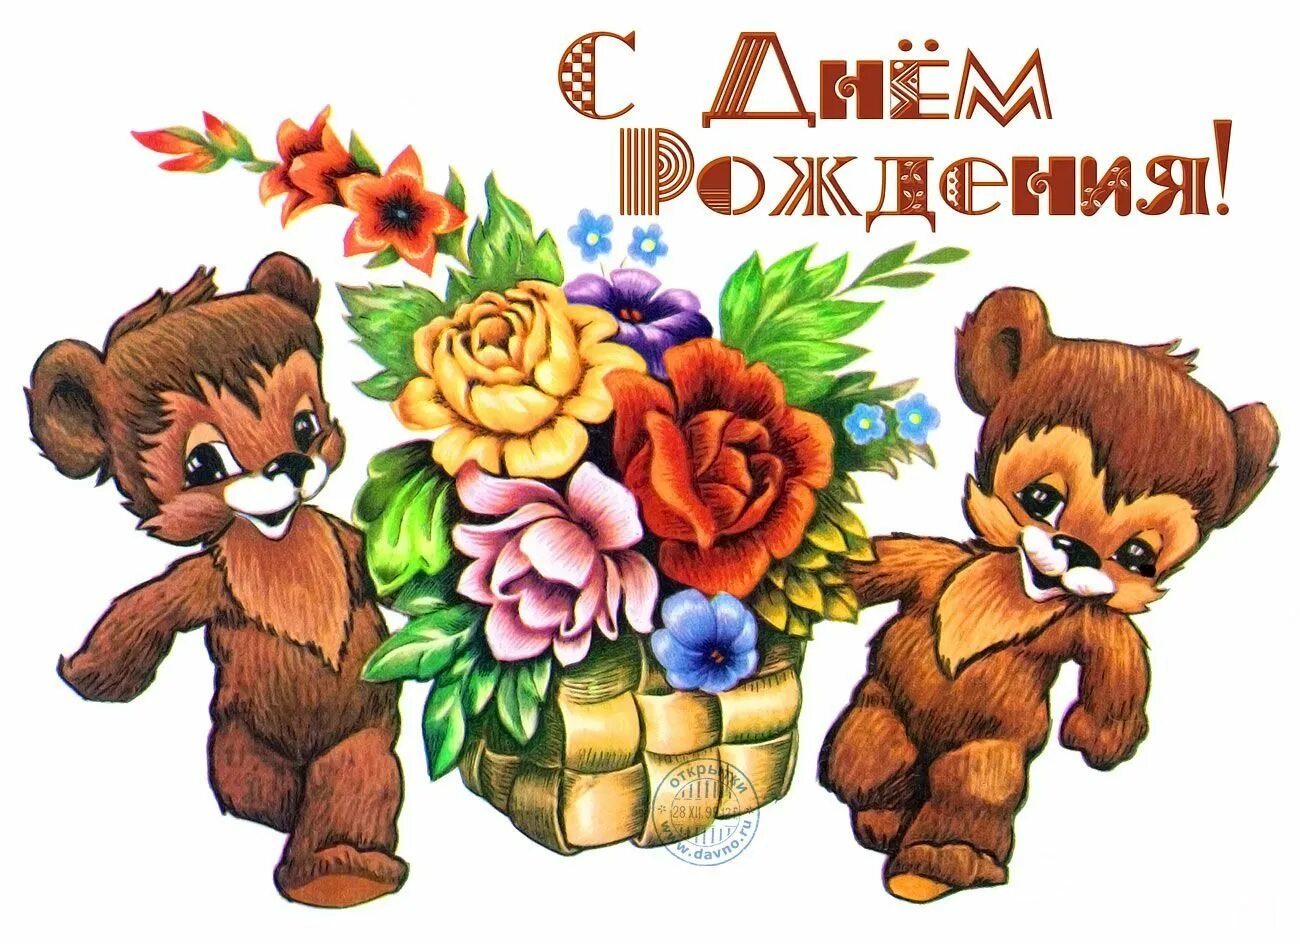 Https открытки с днем рождения. С днём рождения советские открытки. С днем рождения советские открытие. Открытки с днём рождения ребёнку. С днём рождения старинные открытки советские.